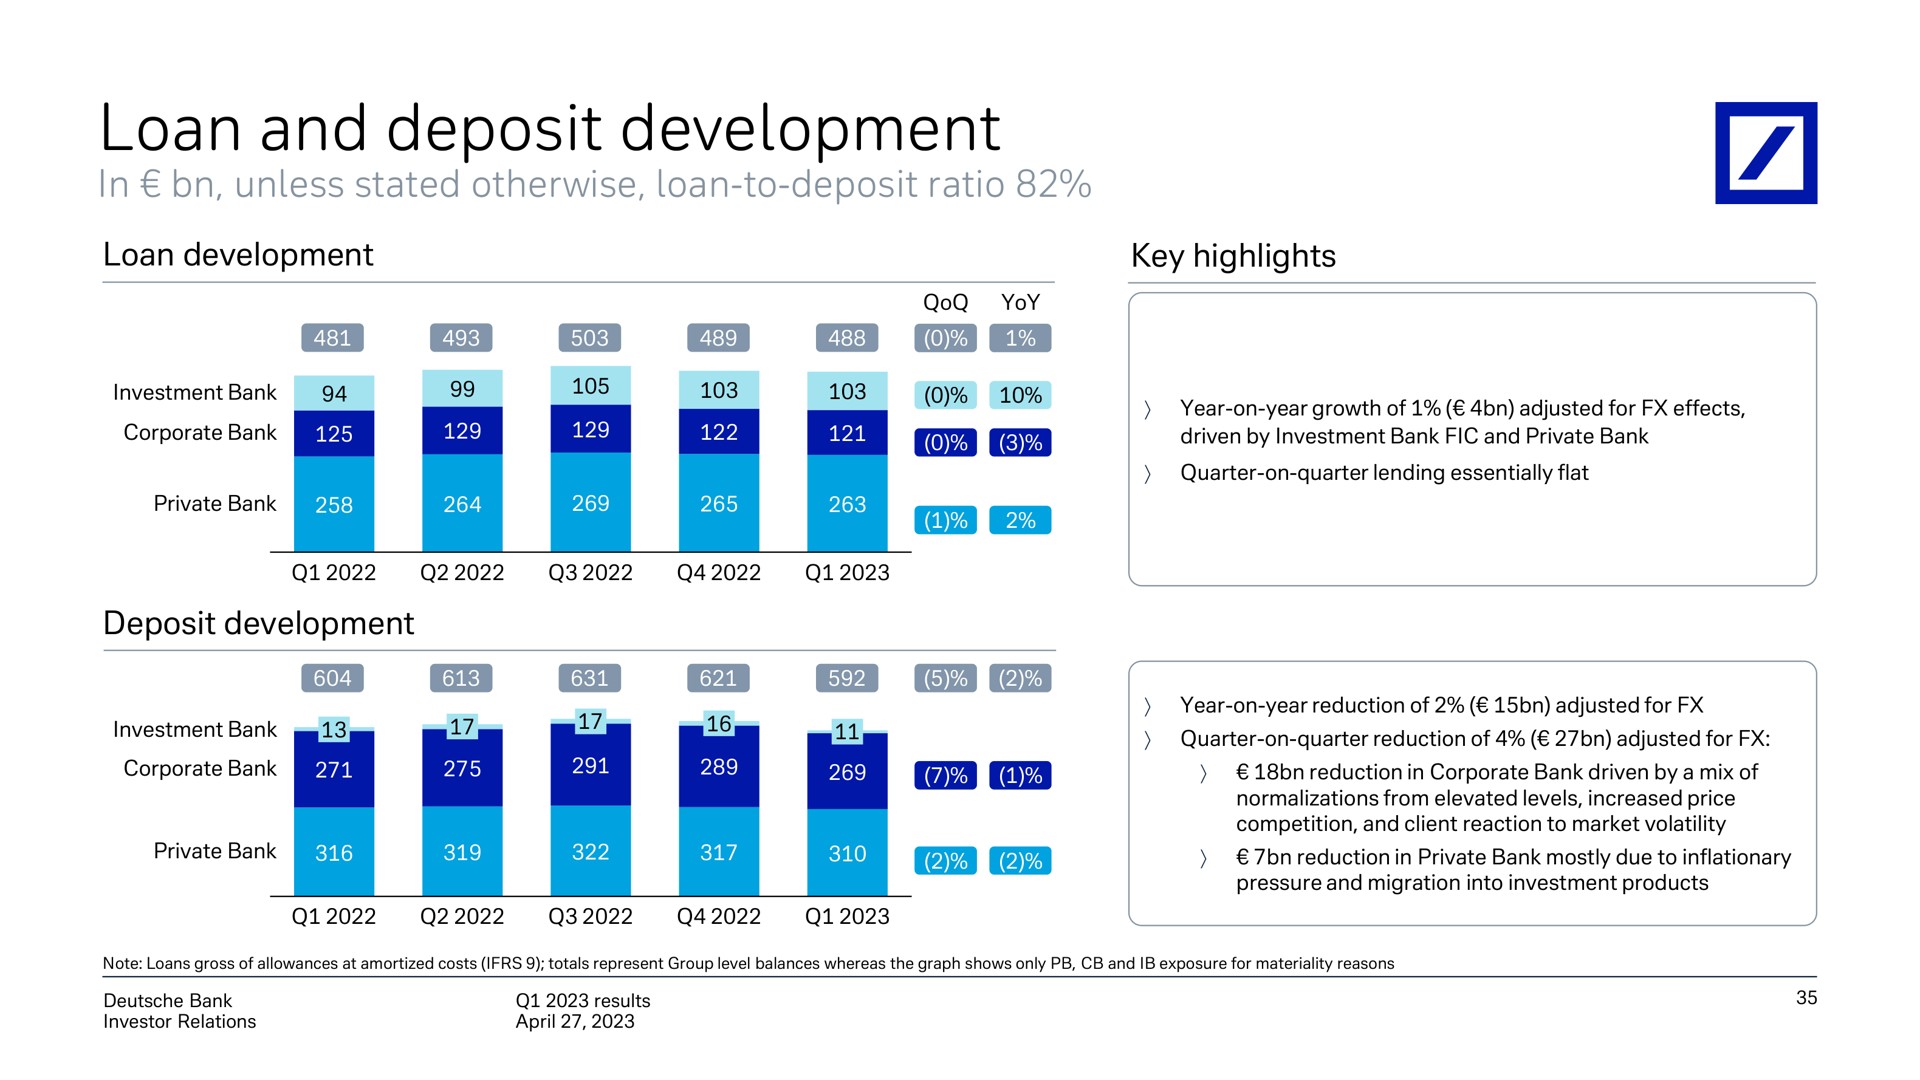 loan and deposit development | Deutsche Bank